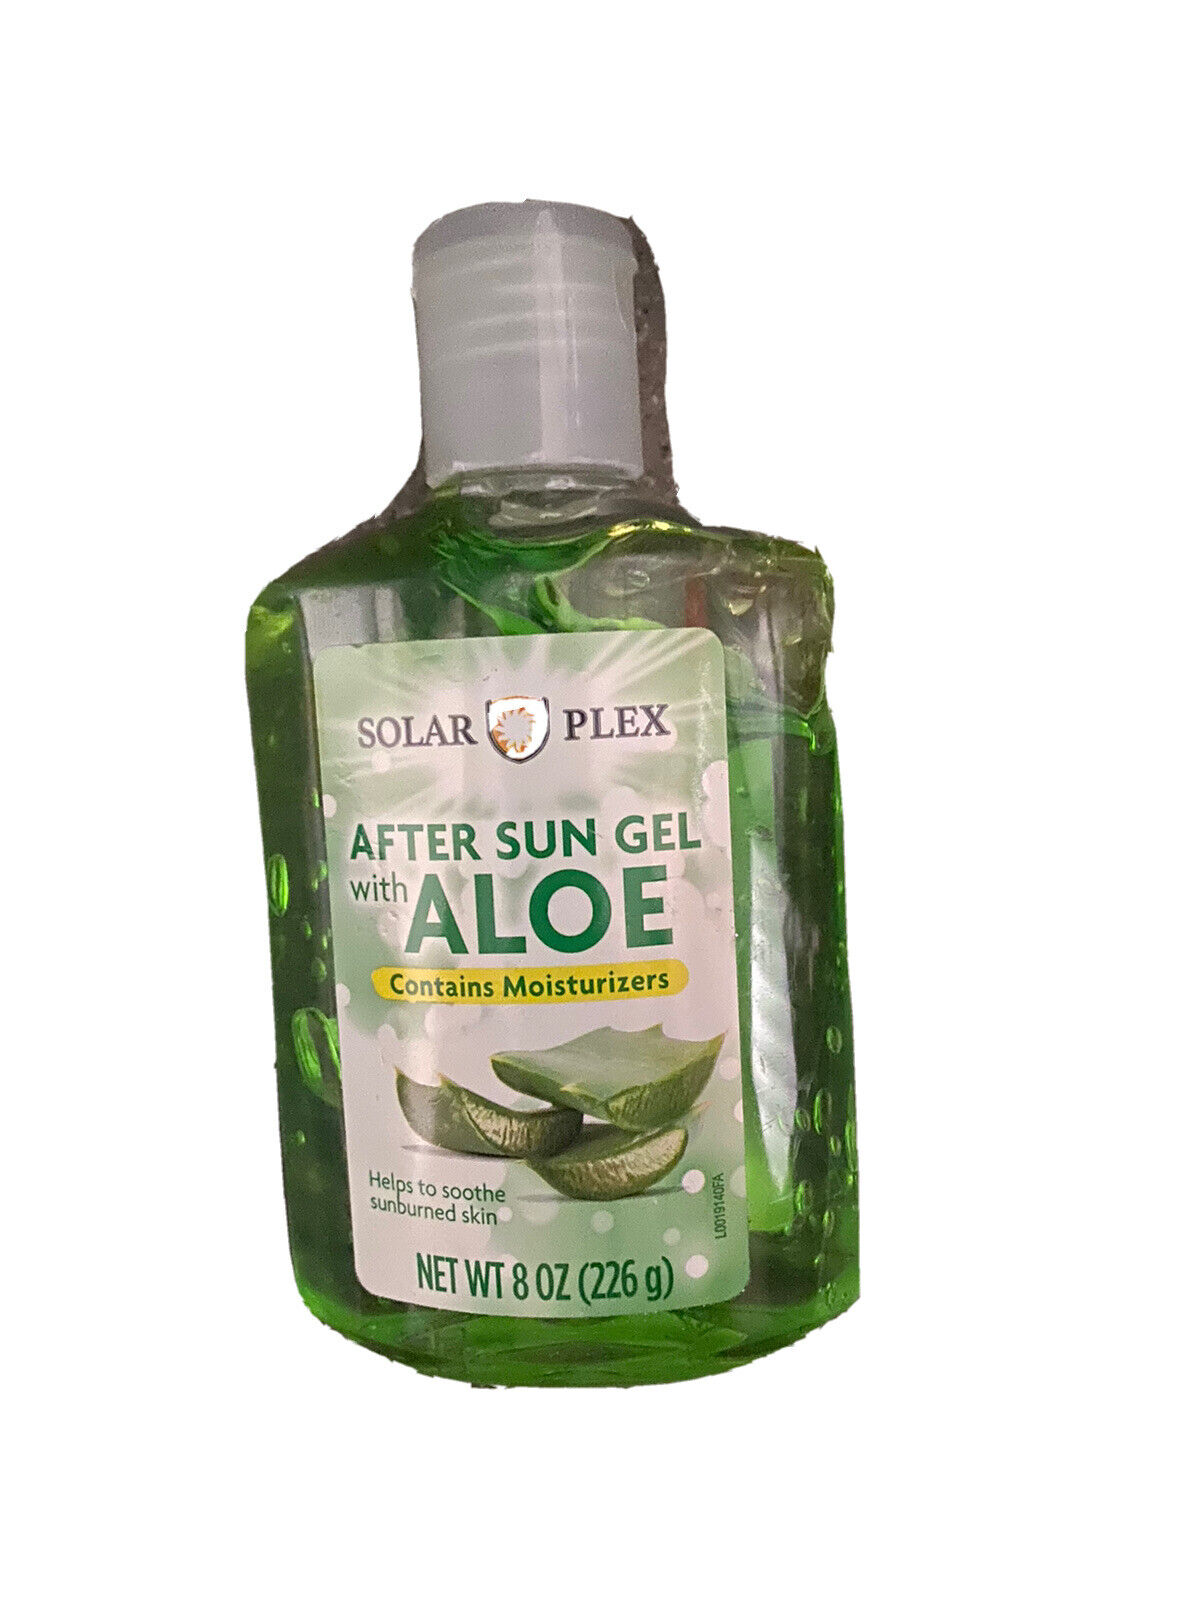 Solar Plex After Sun Gel With Aloe, 8 oz, with moisturizers